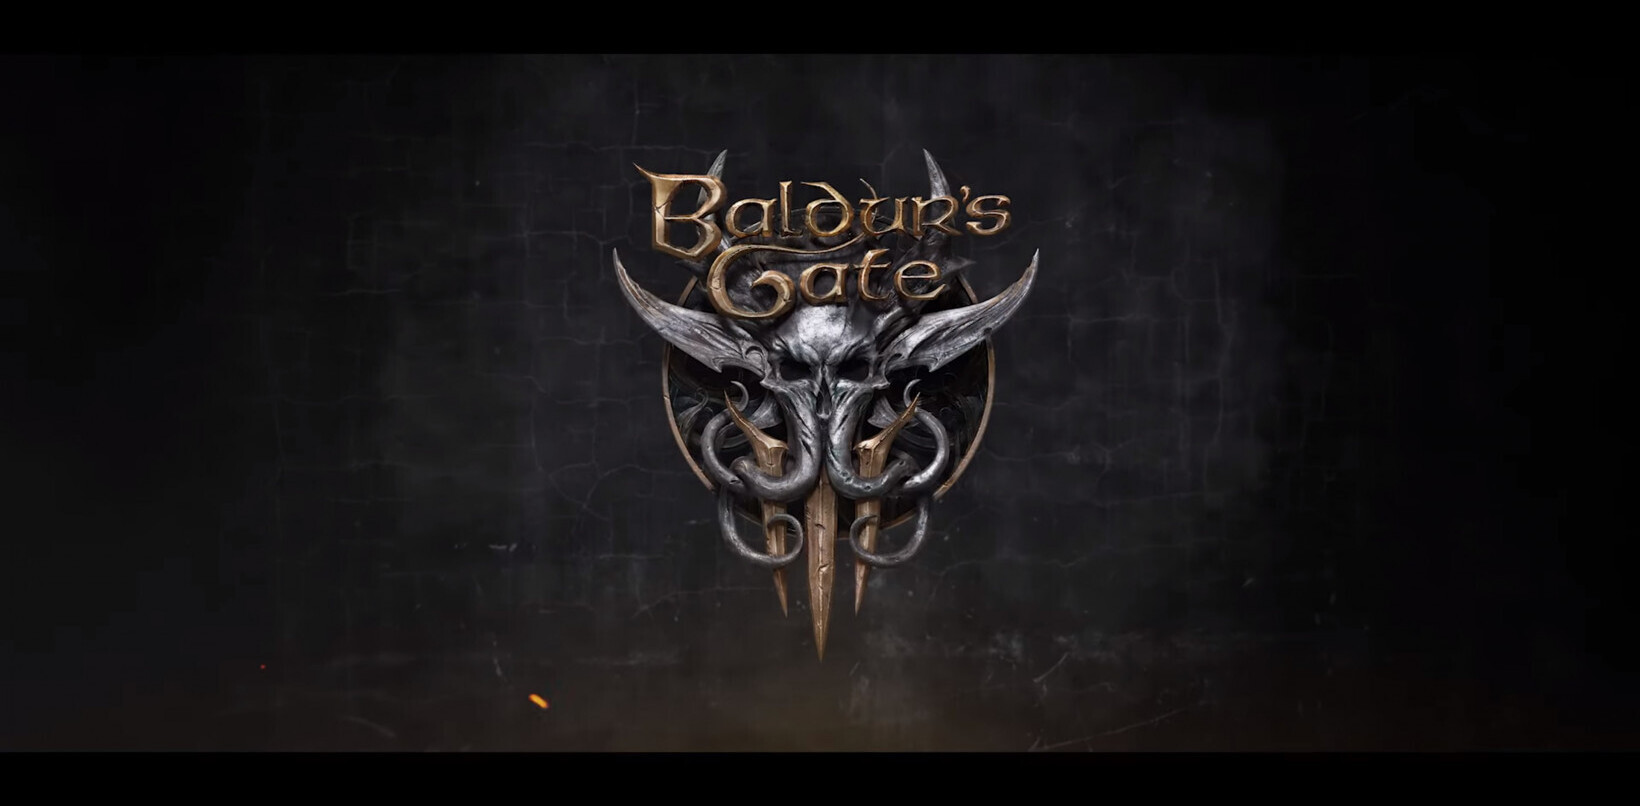 Hasbro announces 7 new D&D games starting with Baldur’s Gate 3